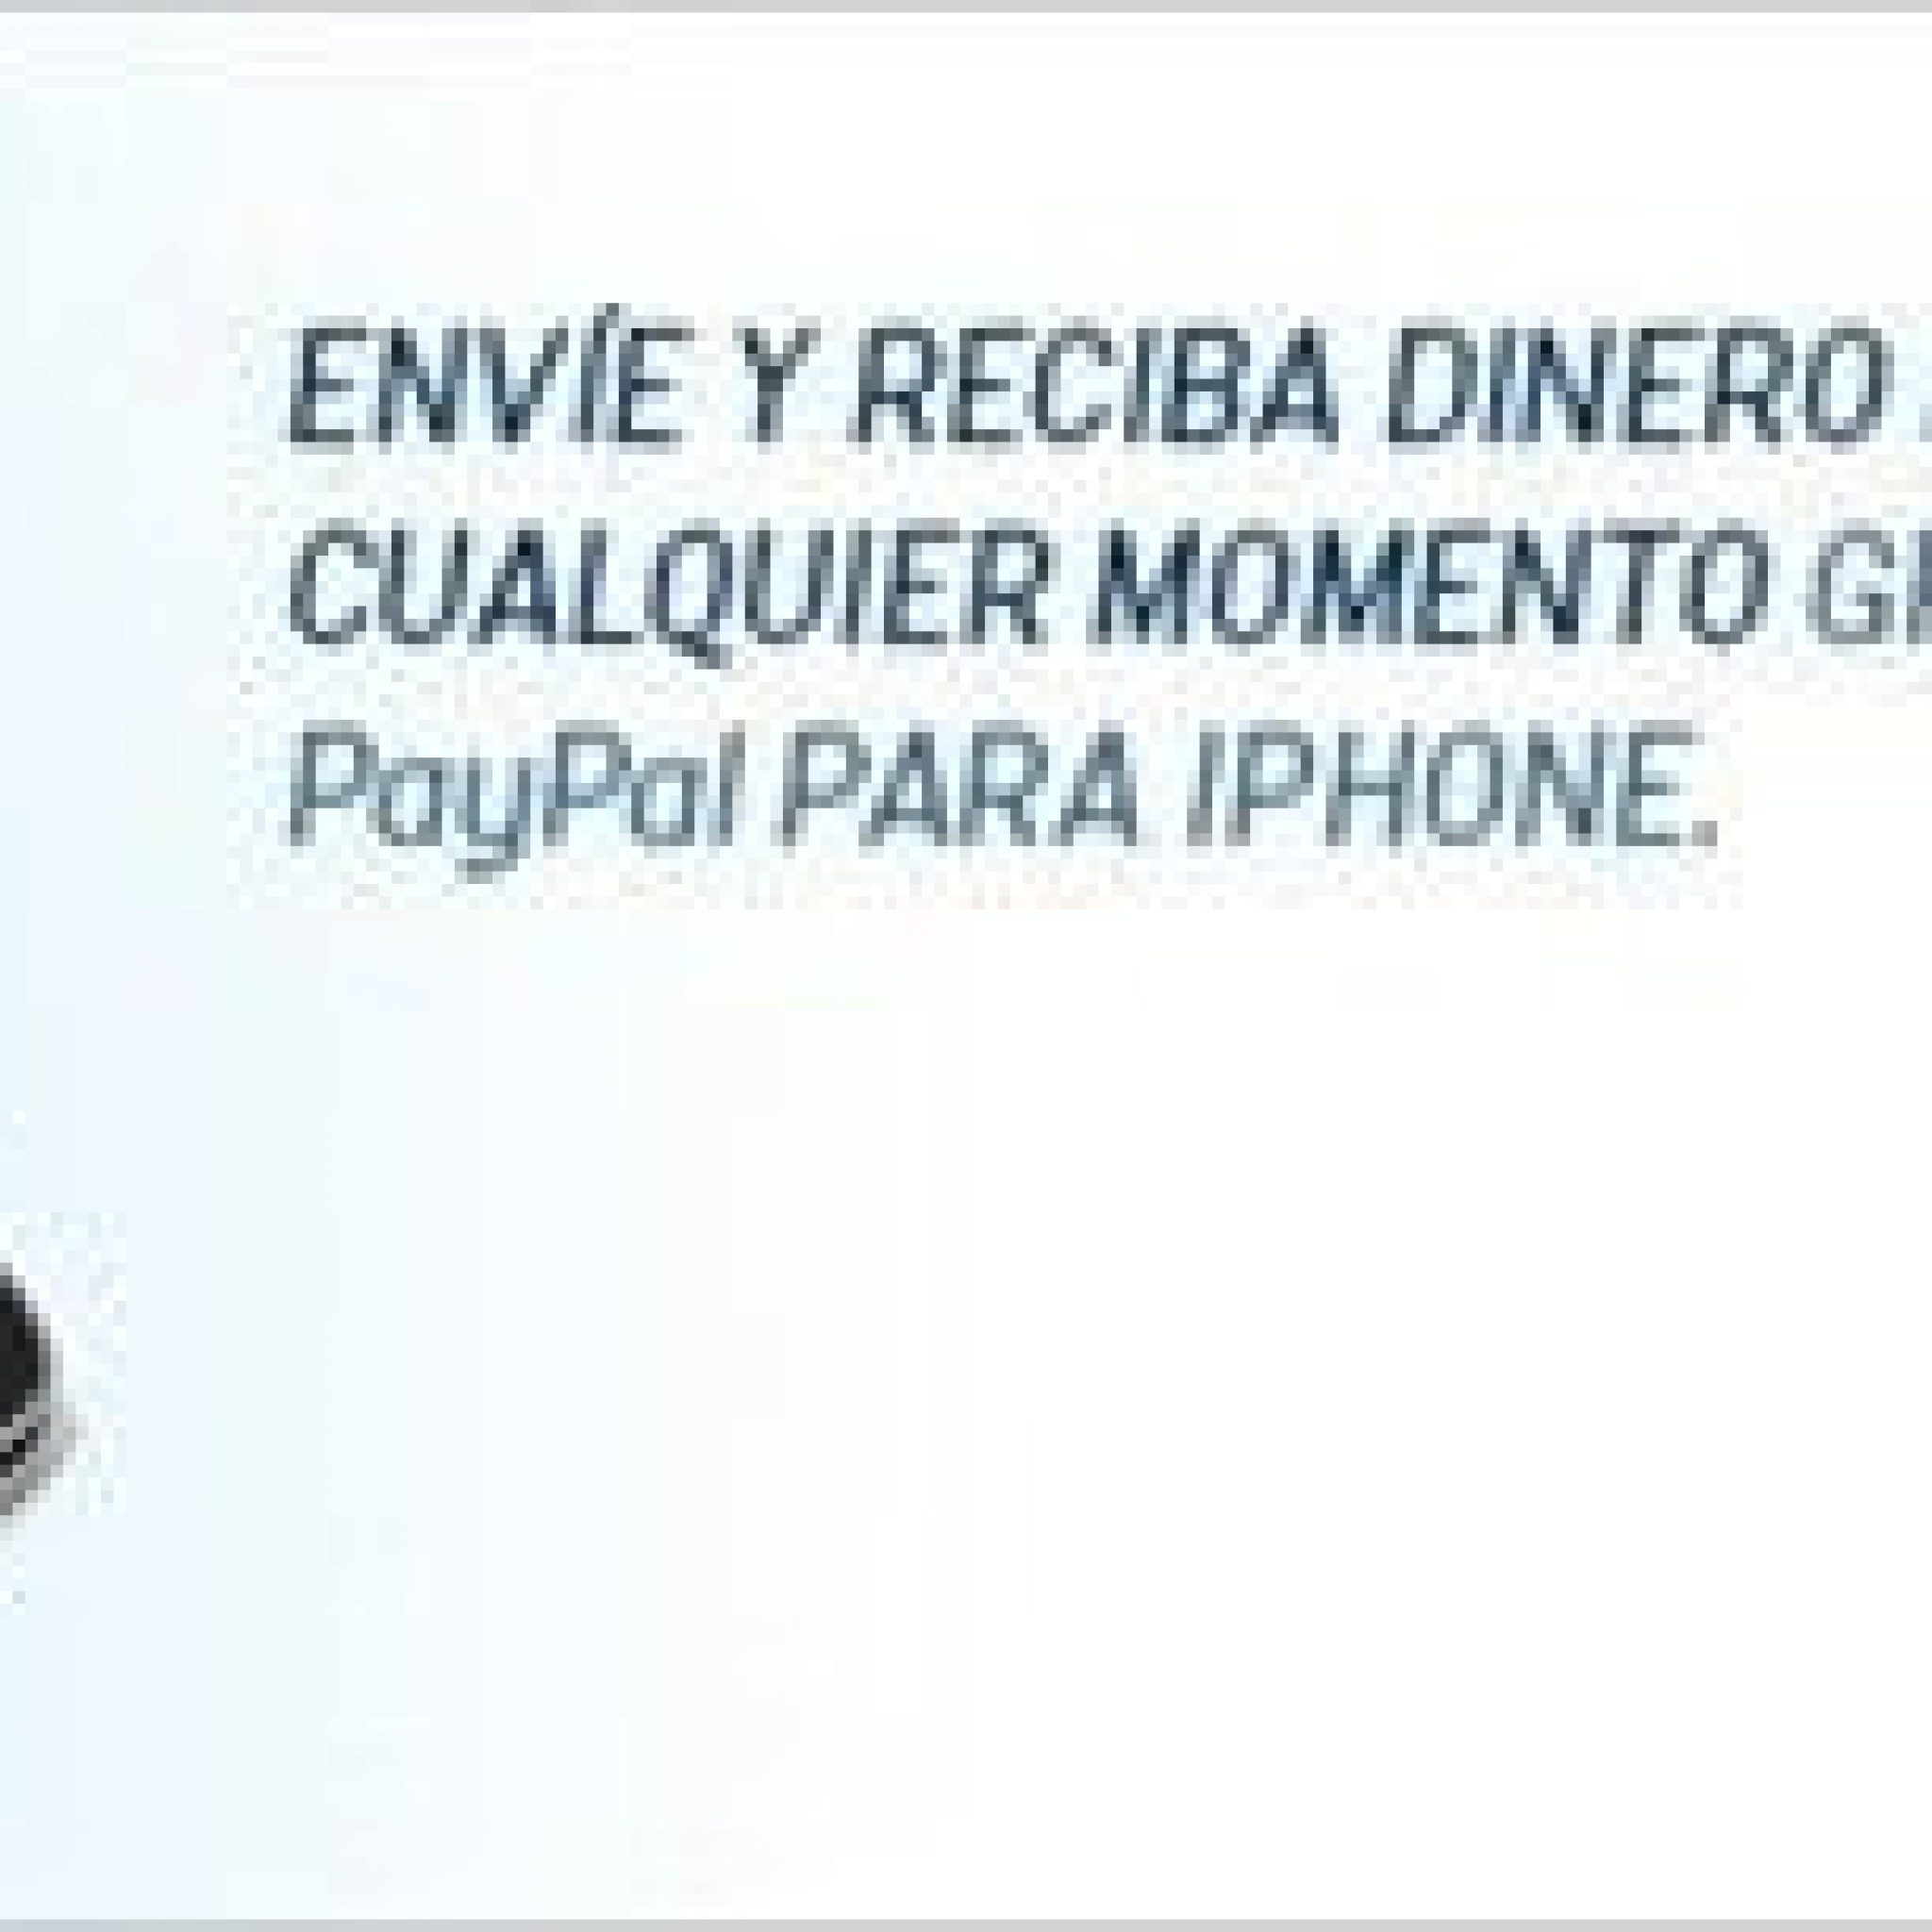 Paypal Para Iphone